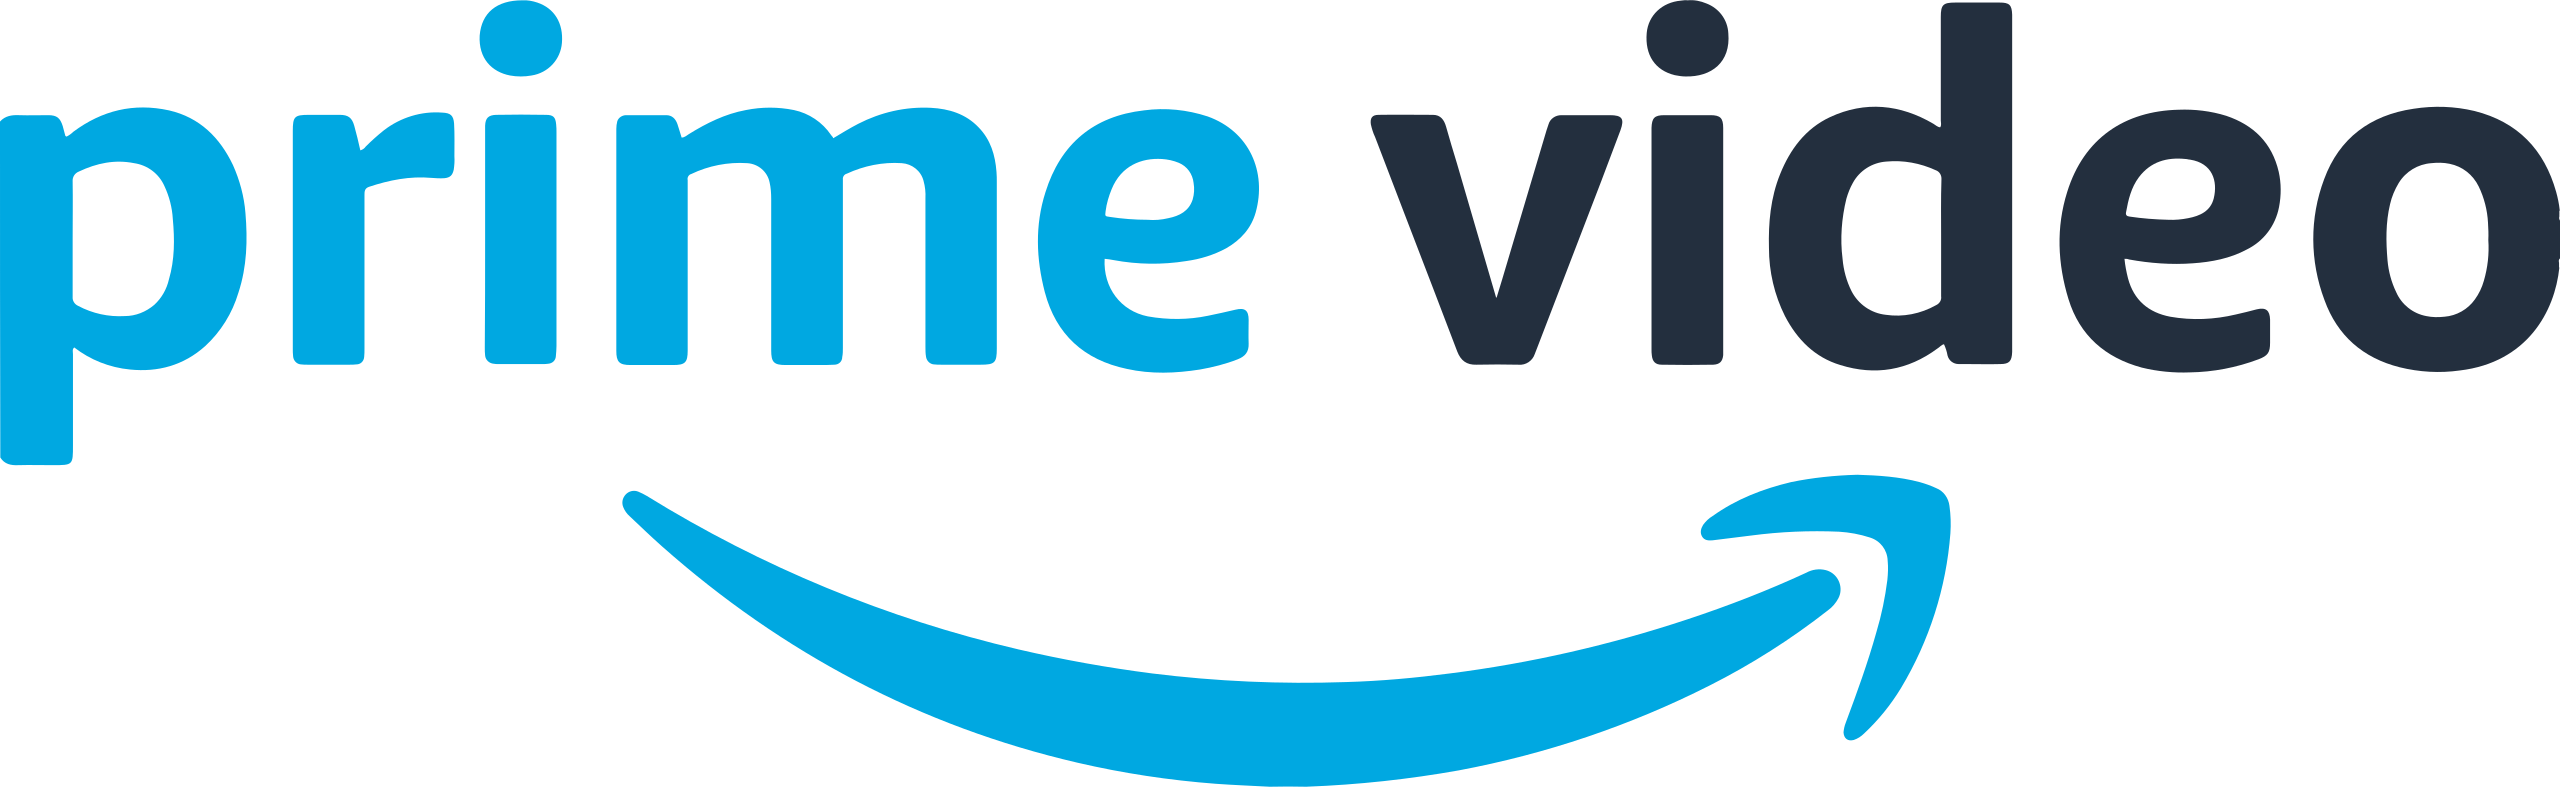 amazon-prive video logo